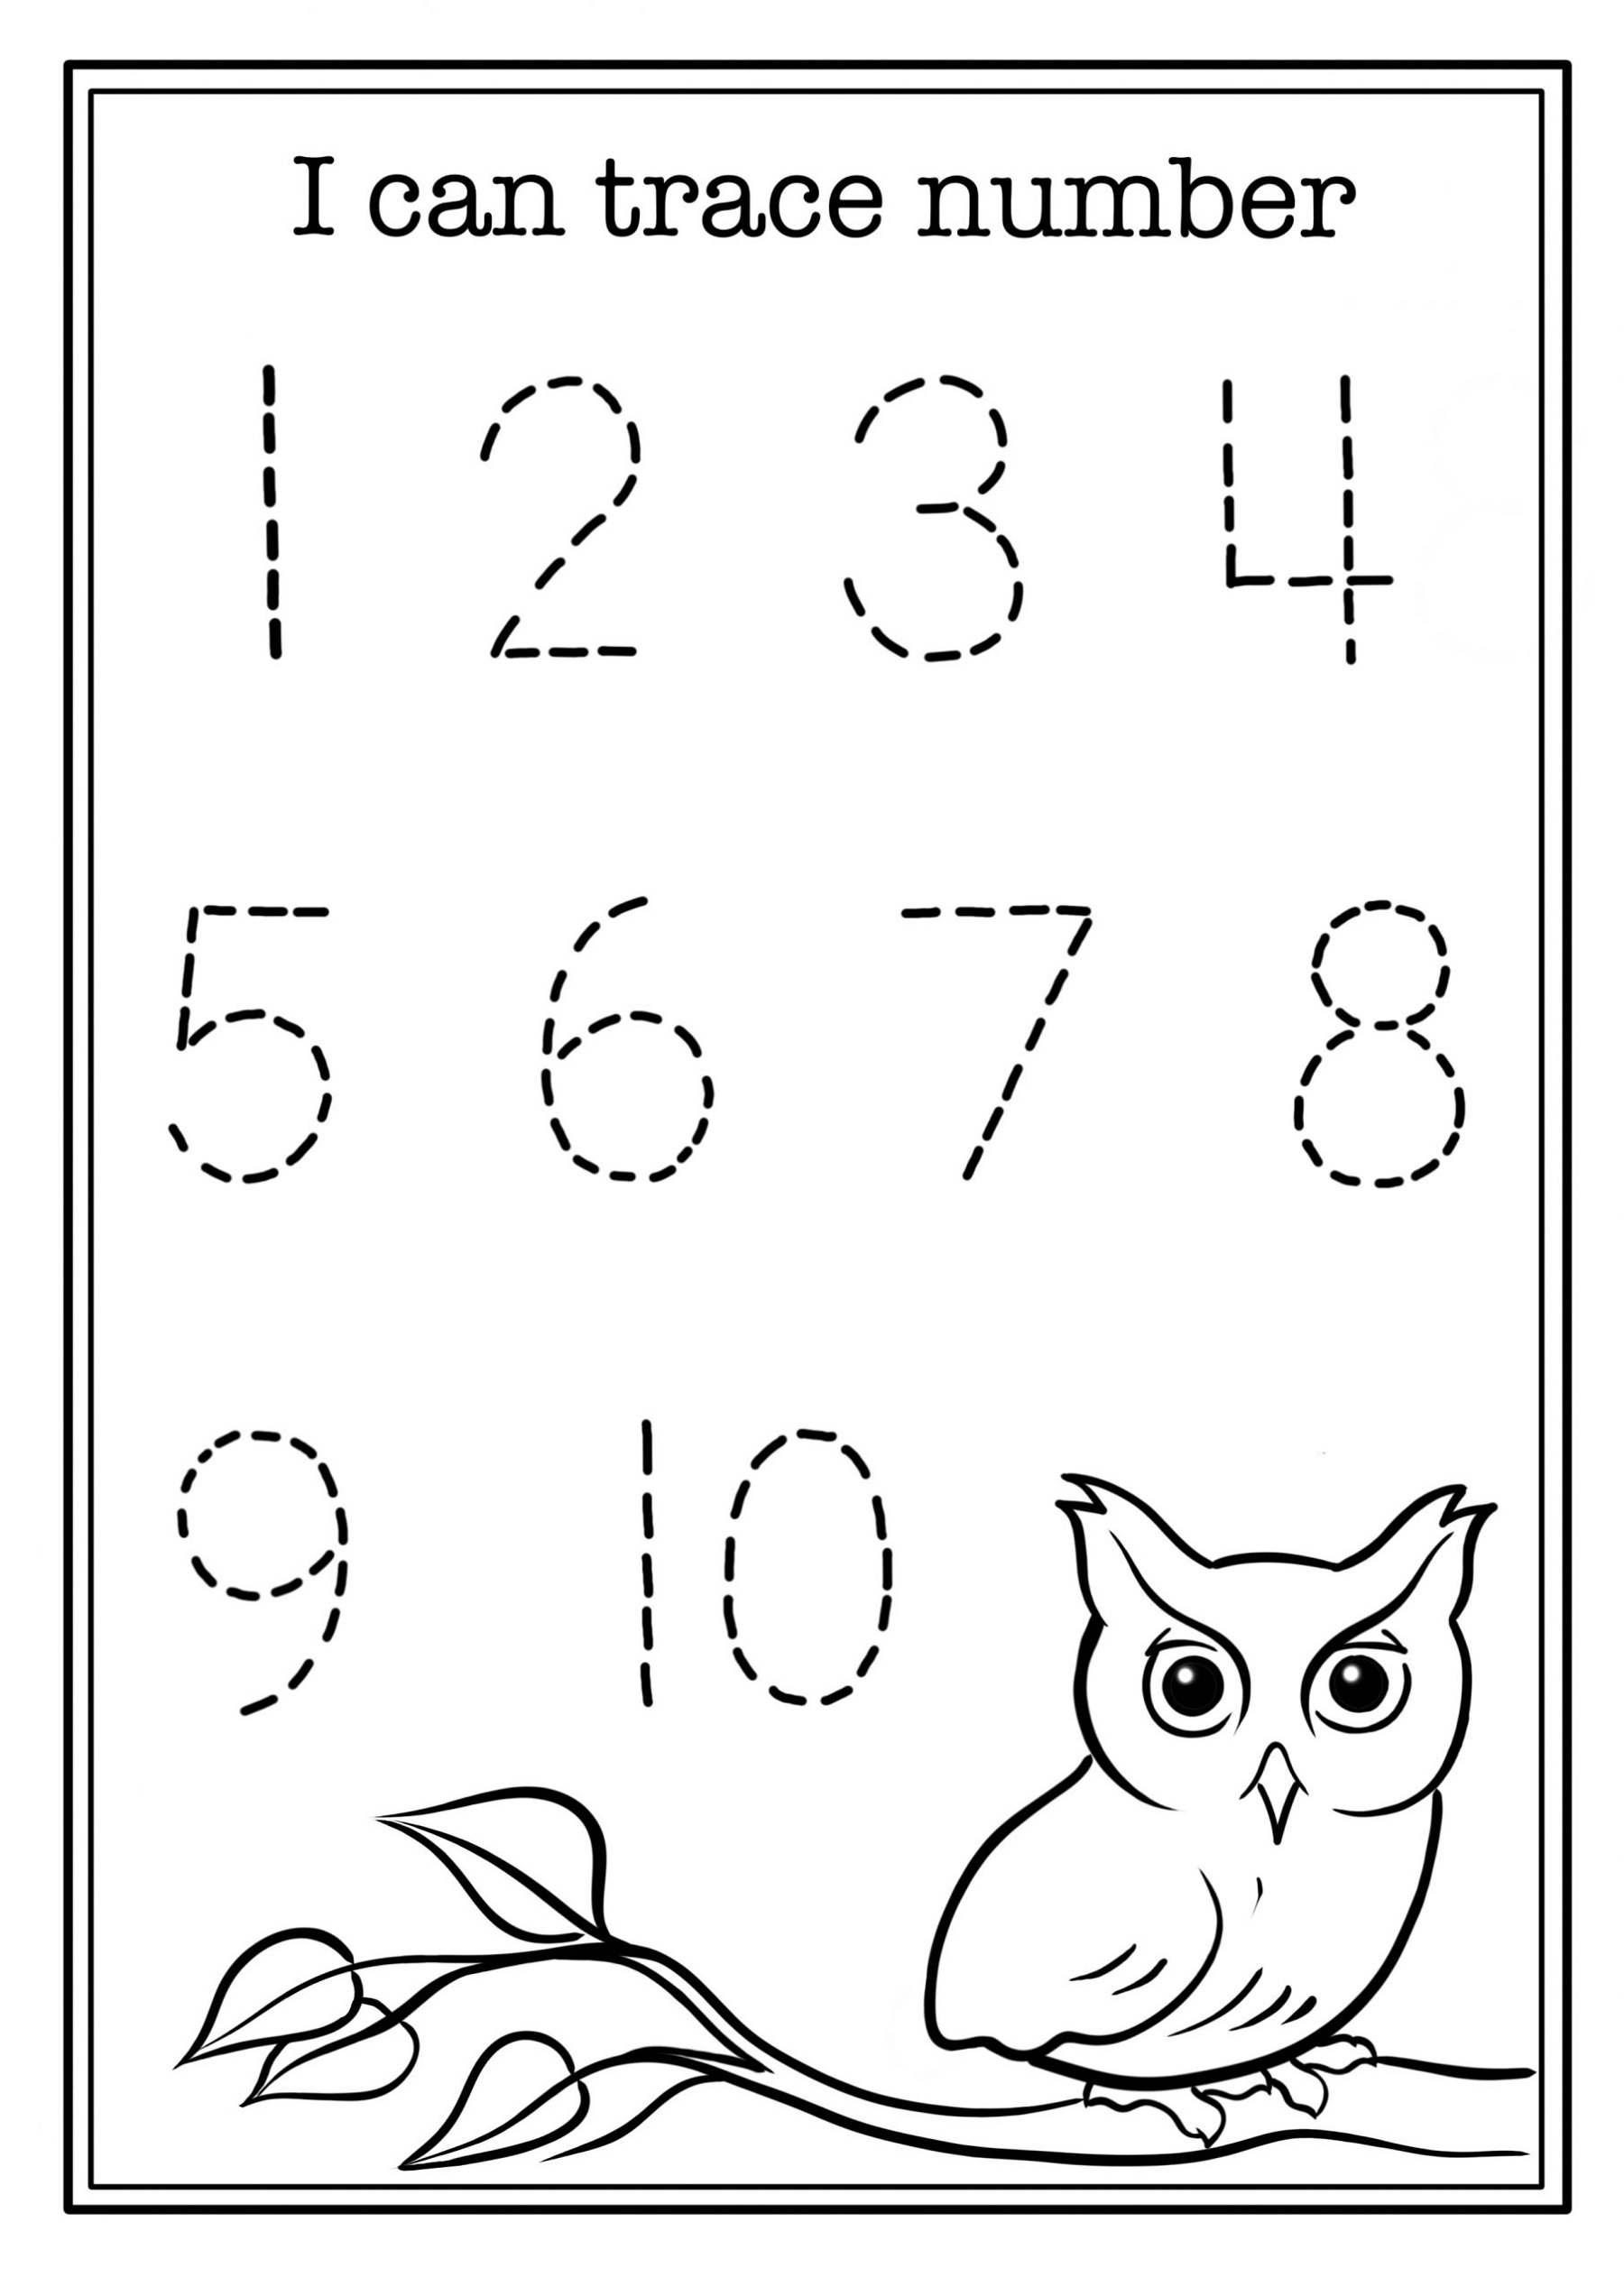 Free Preschool Worksheets Trace Number